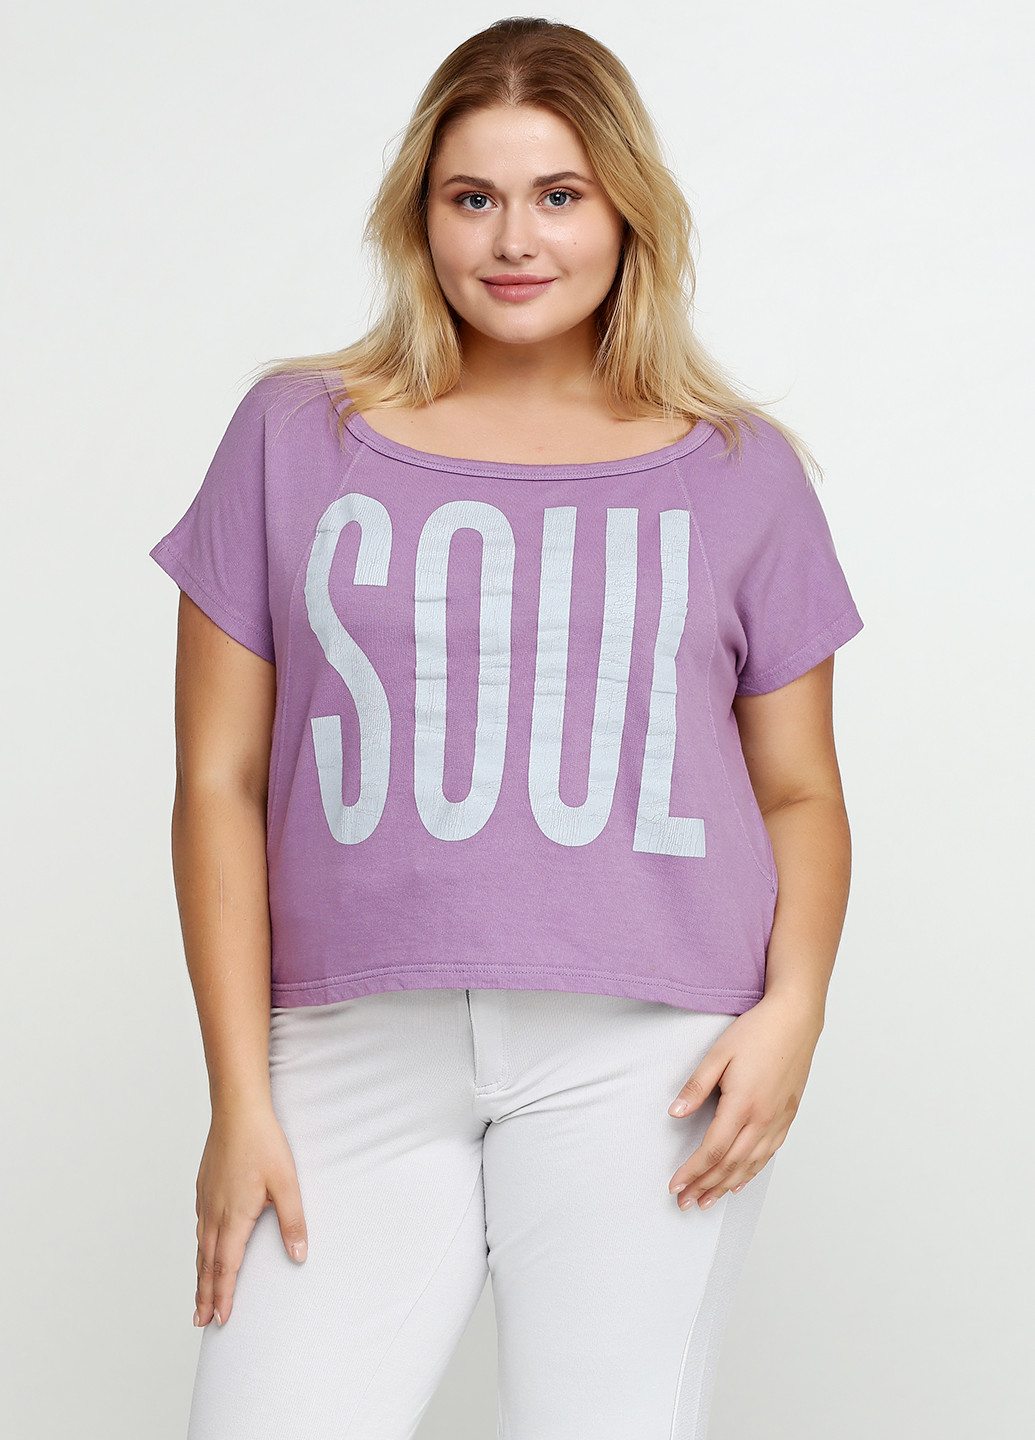 Фиолетовая летняя футболка Pepperrose